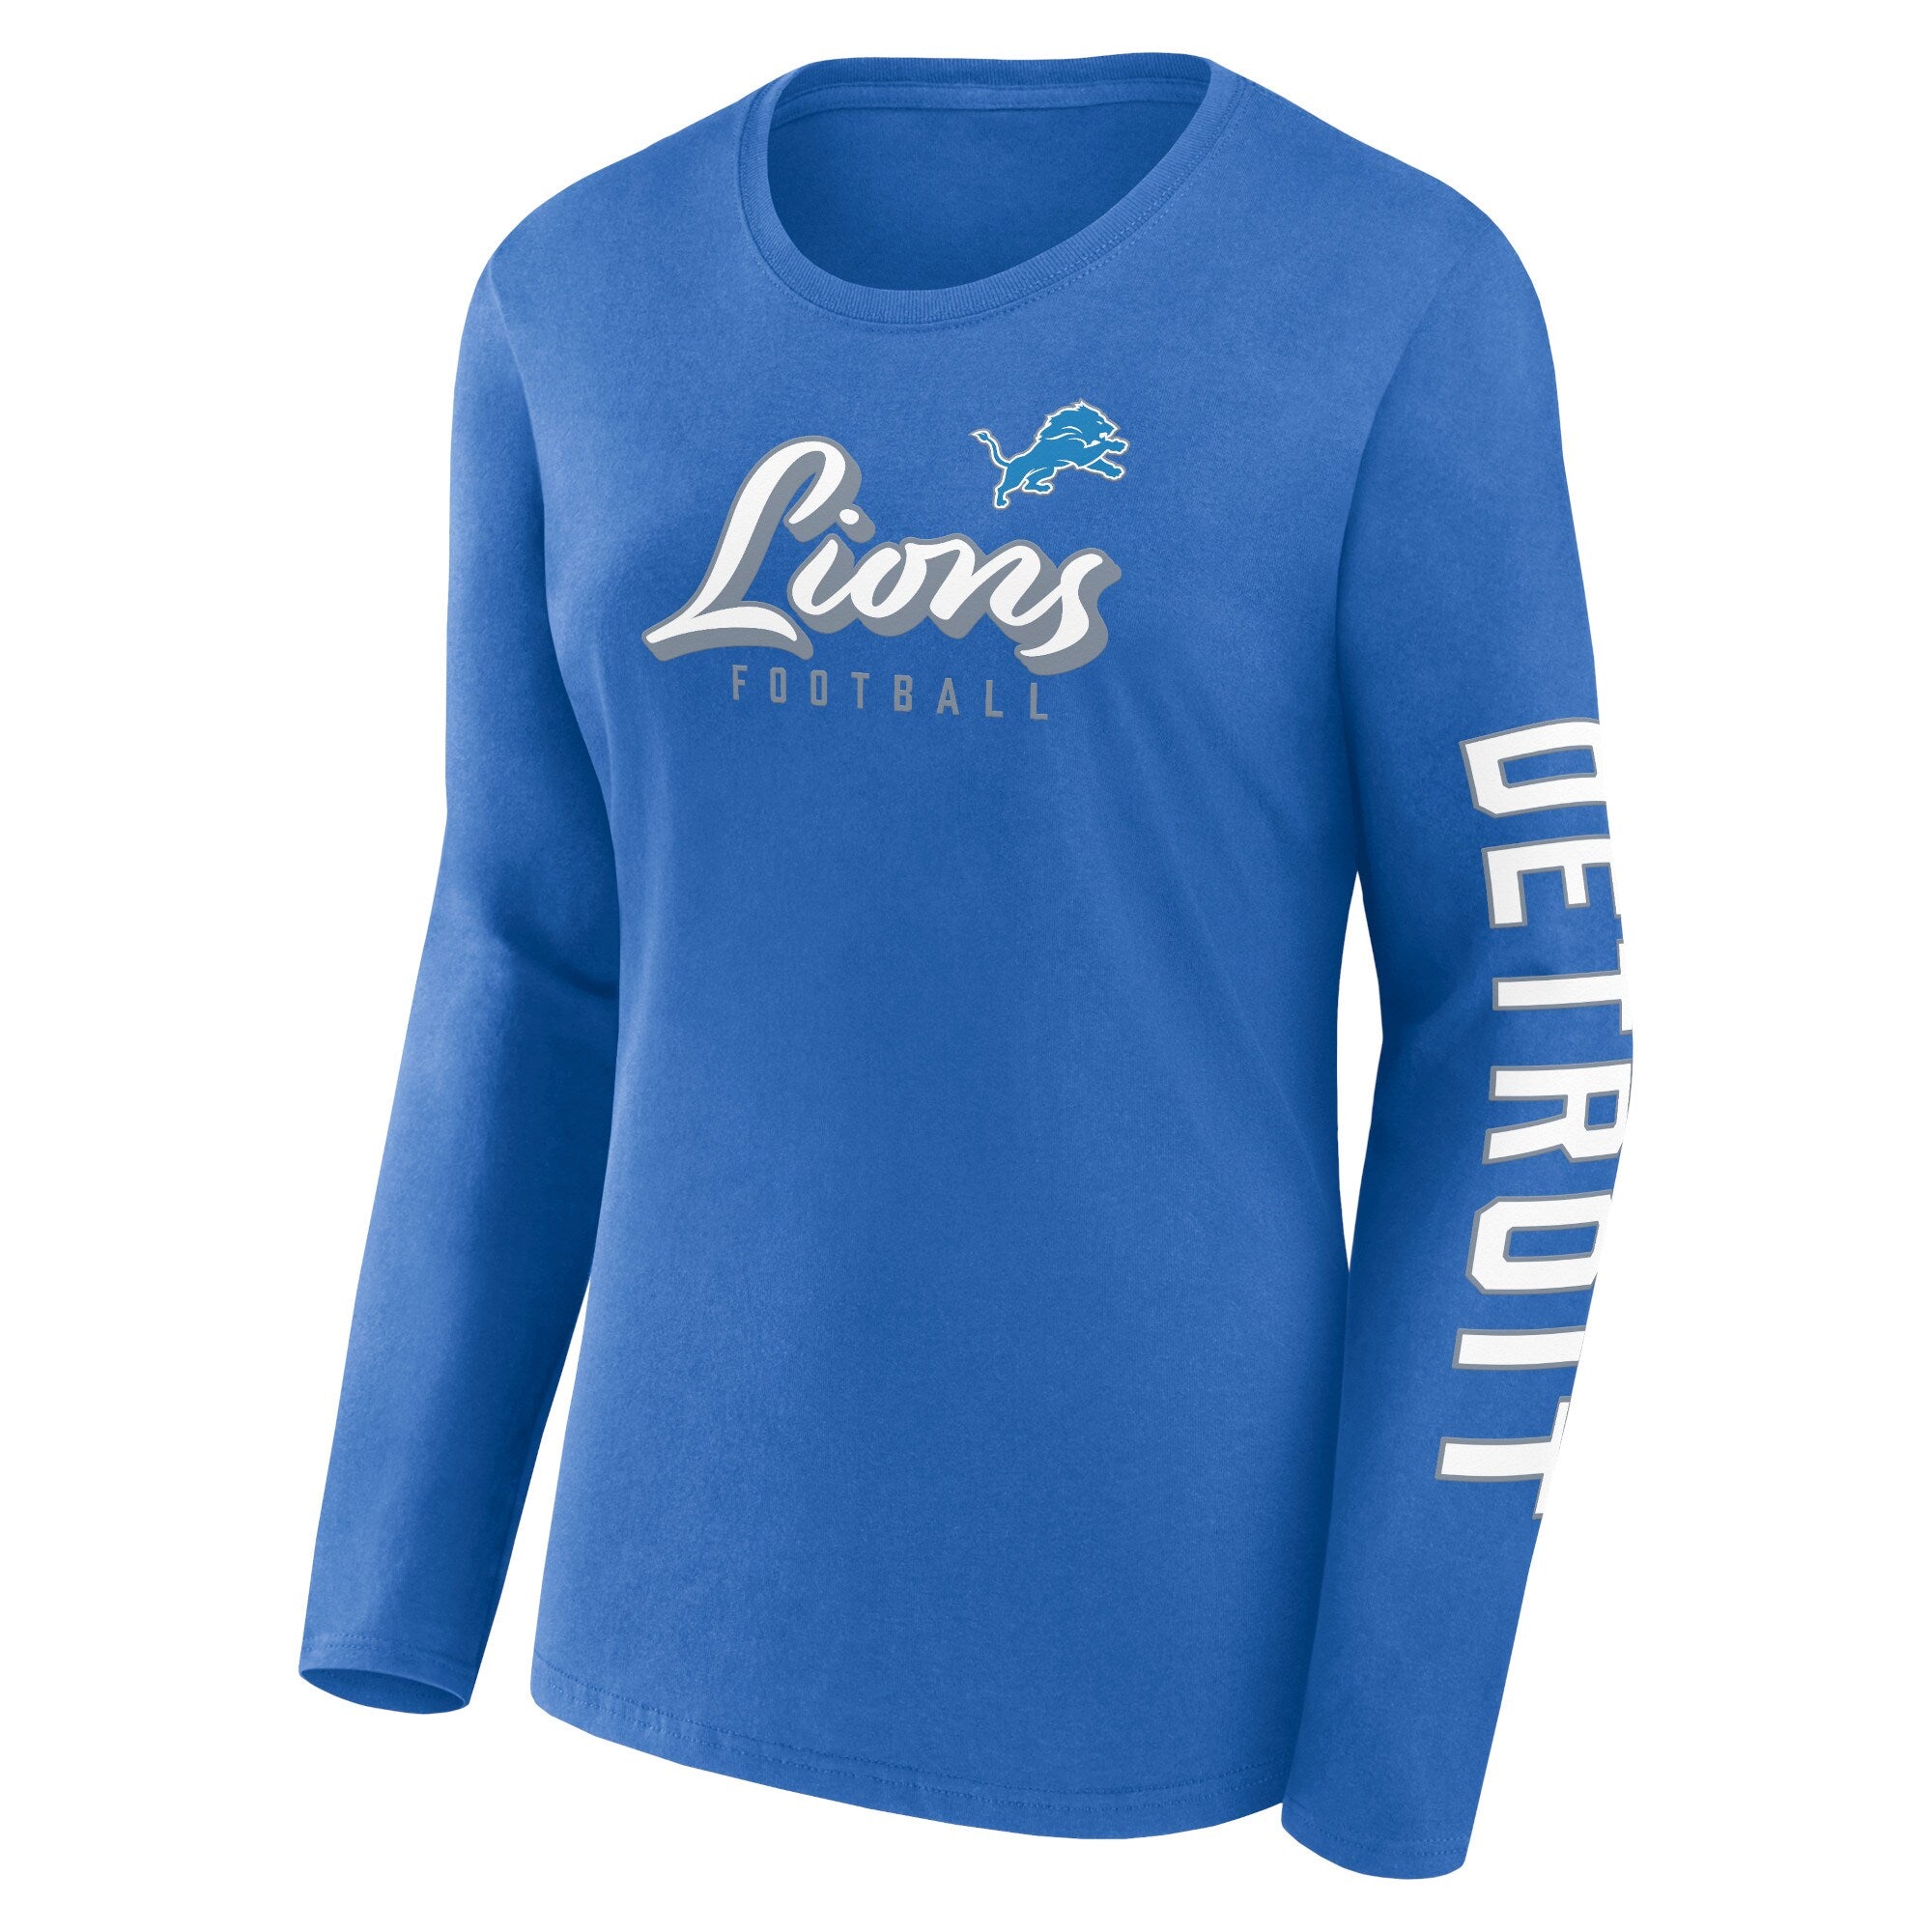 Women's Fanatics Branded Blue/White Detroit Lions Combo Cheerleader Longsleeve